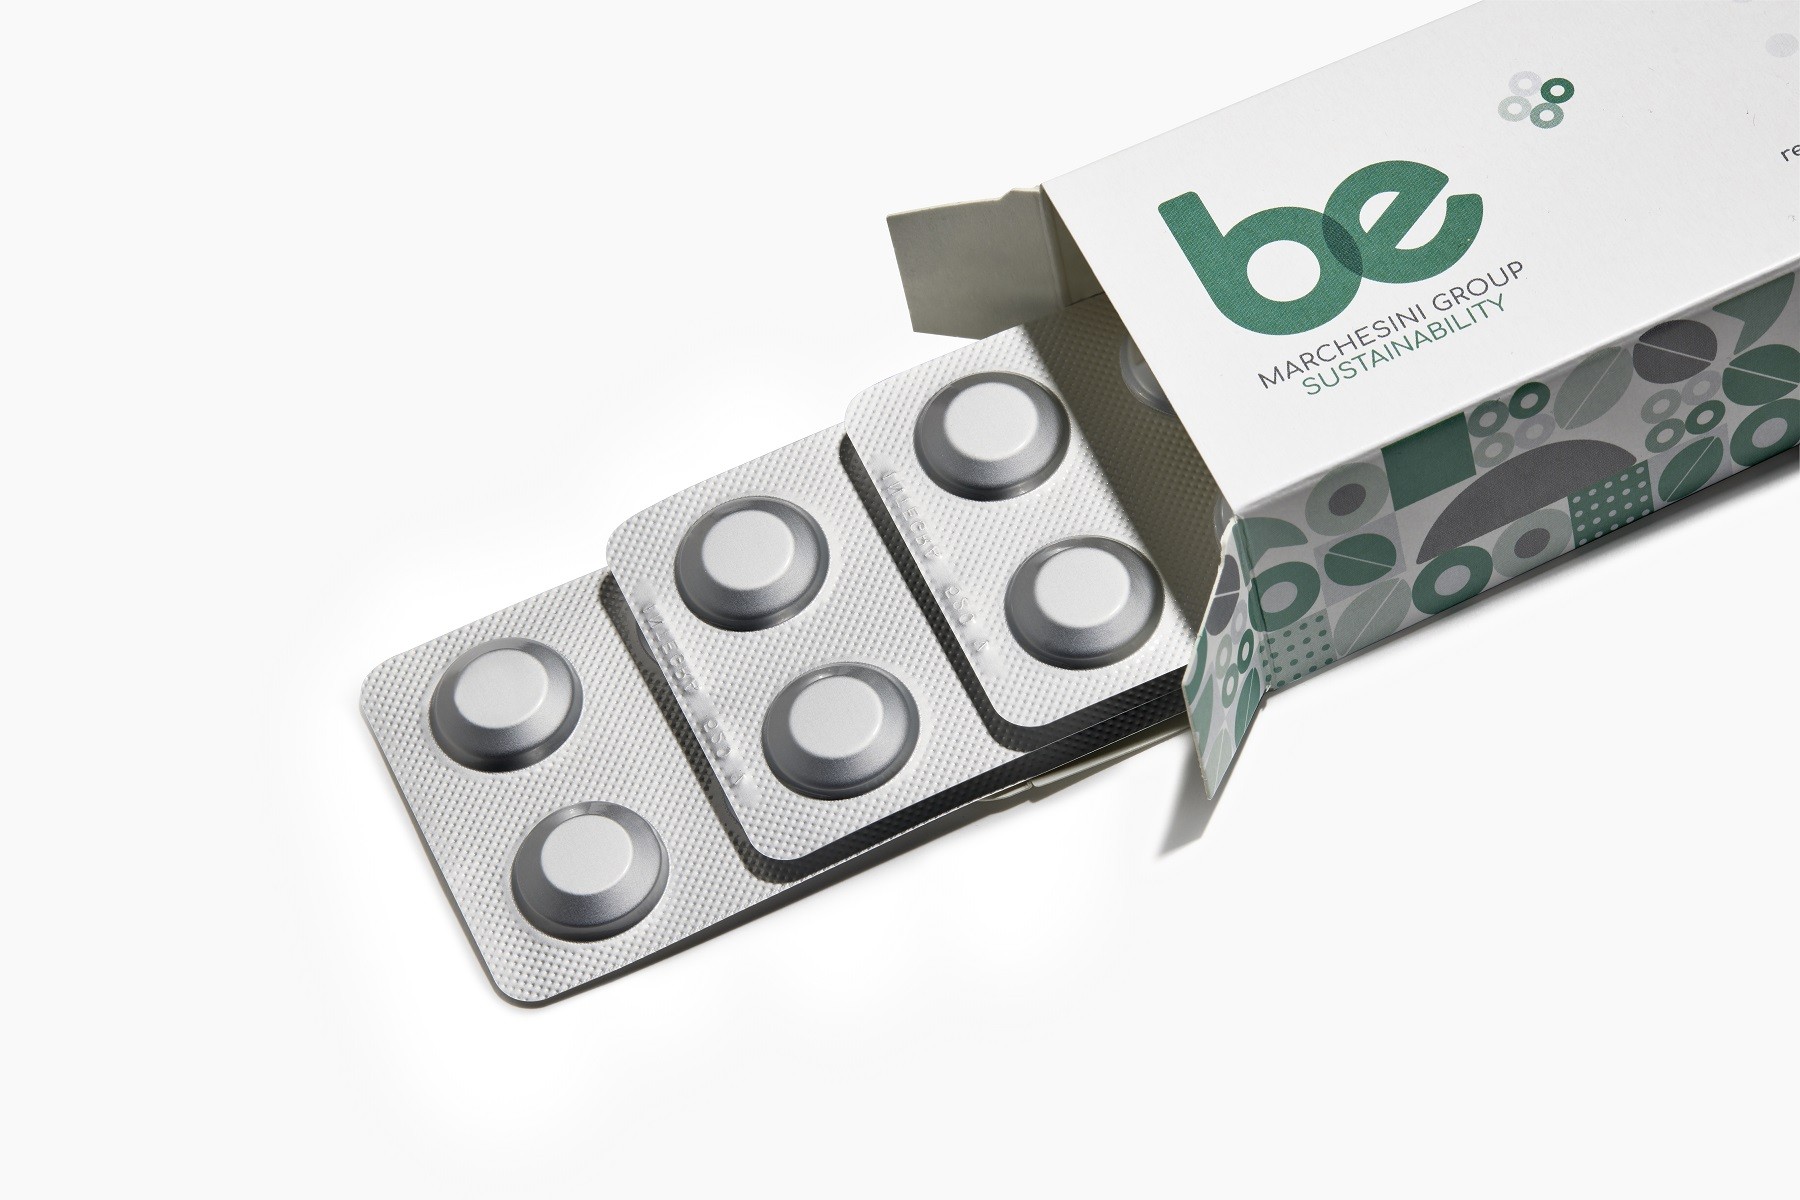 Marchesini Group packaging consisting of seventy-five percent PVC-free aluminium